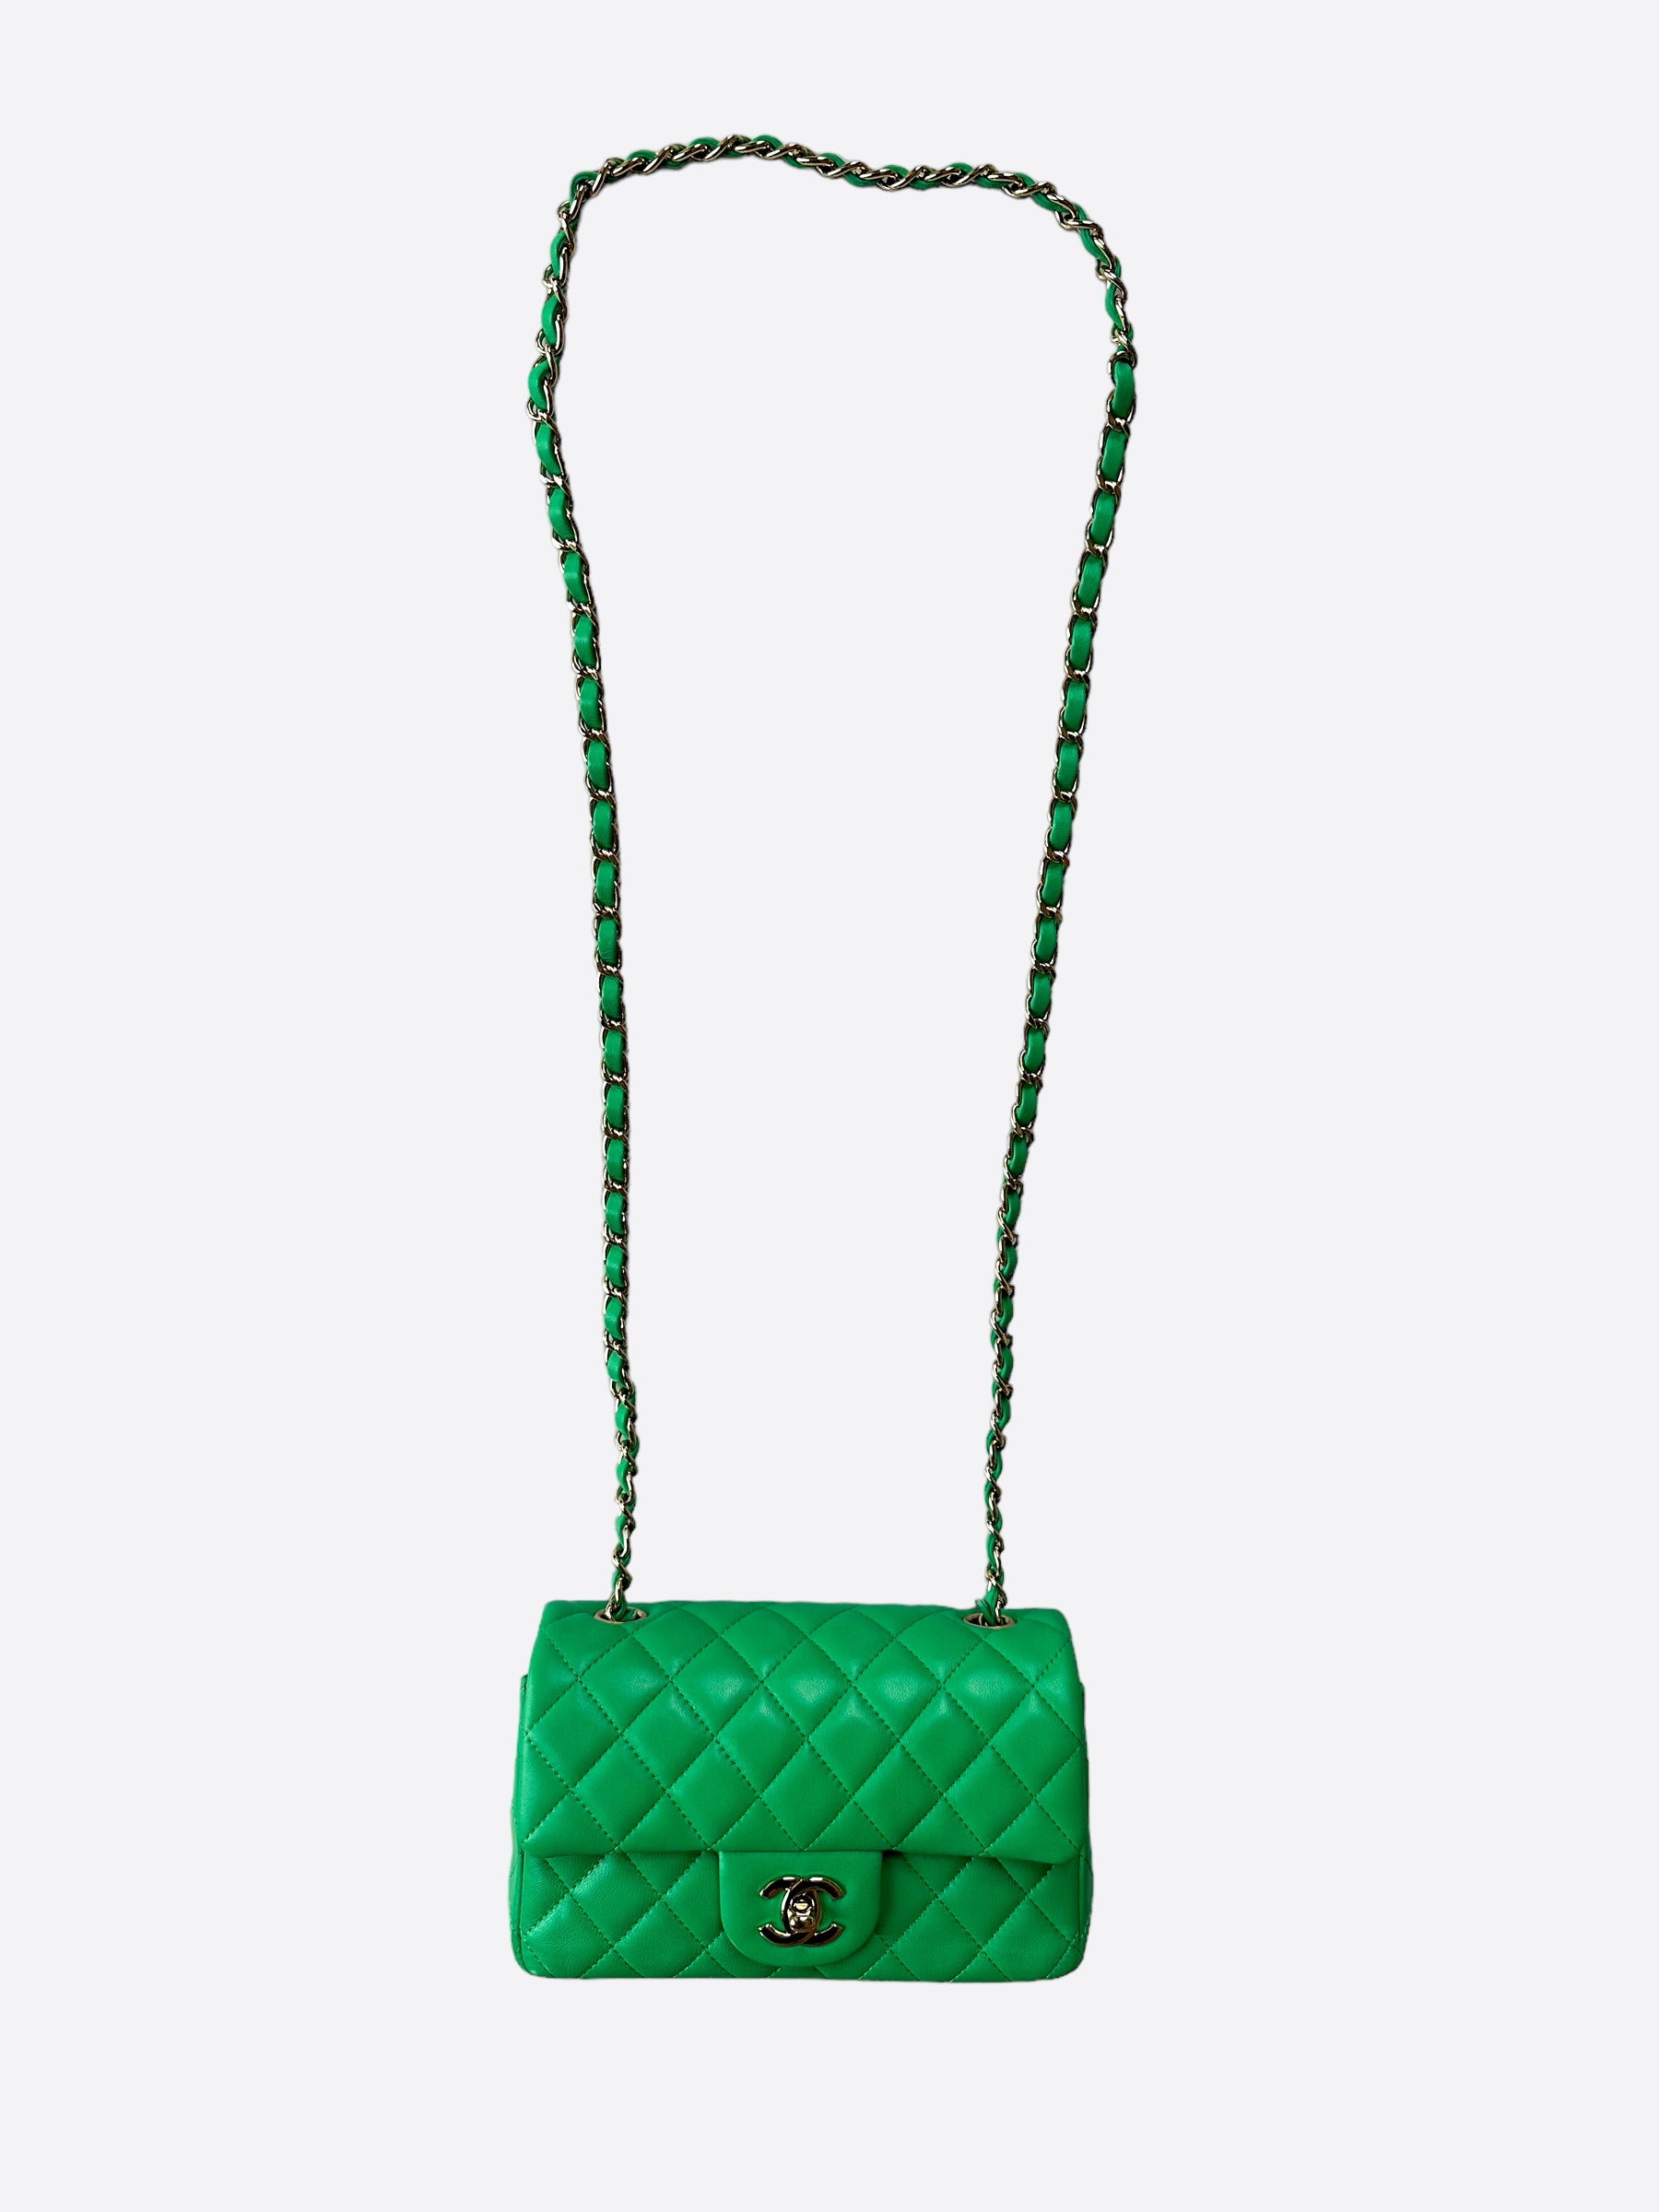 Chanel Green Mini Lambskin Flap Bag